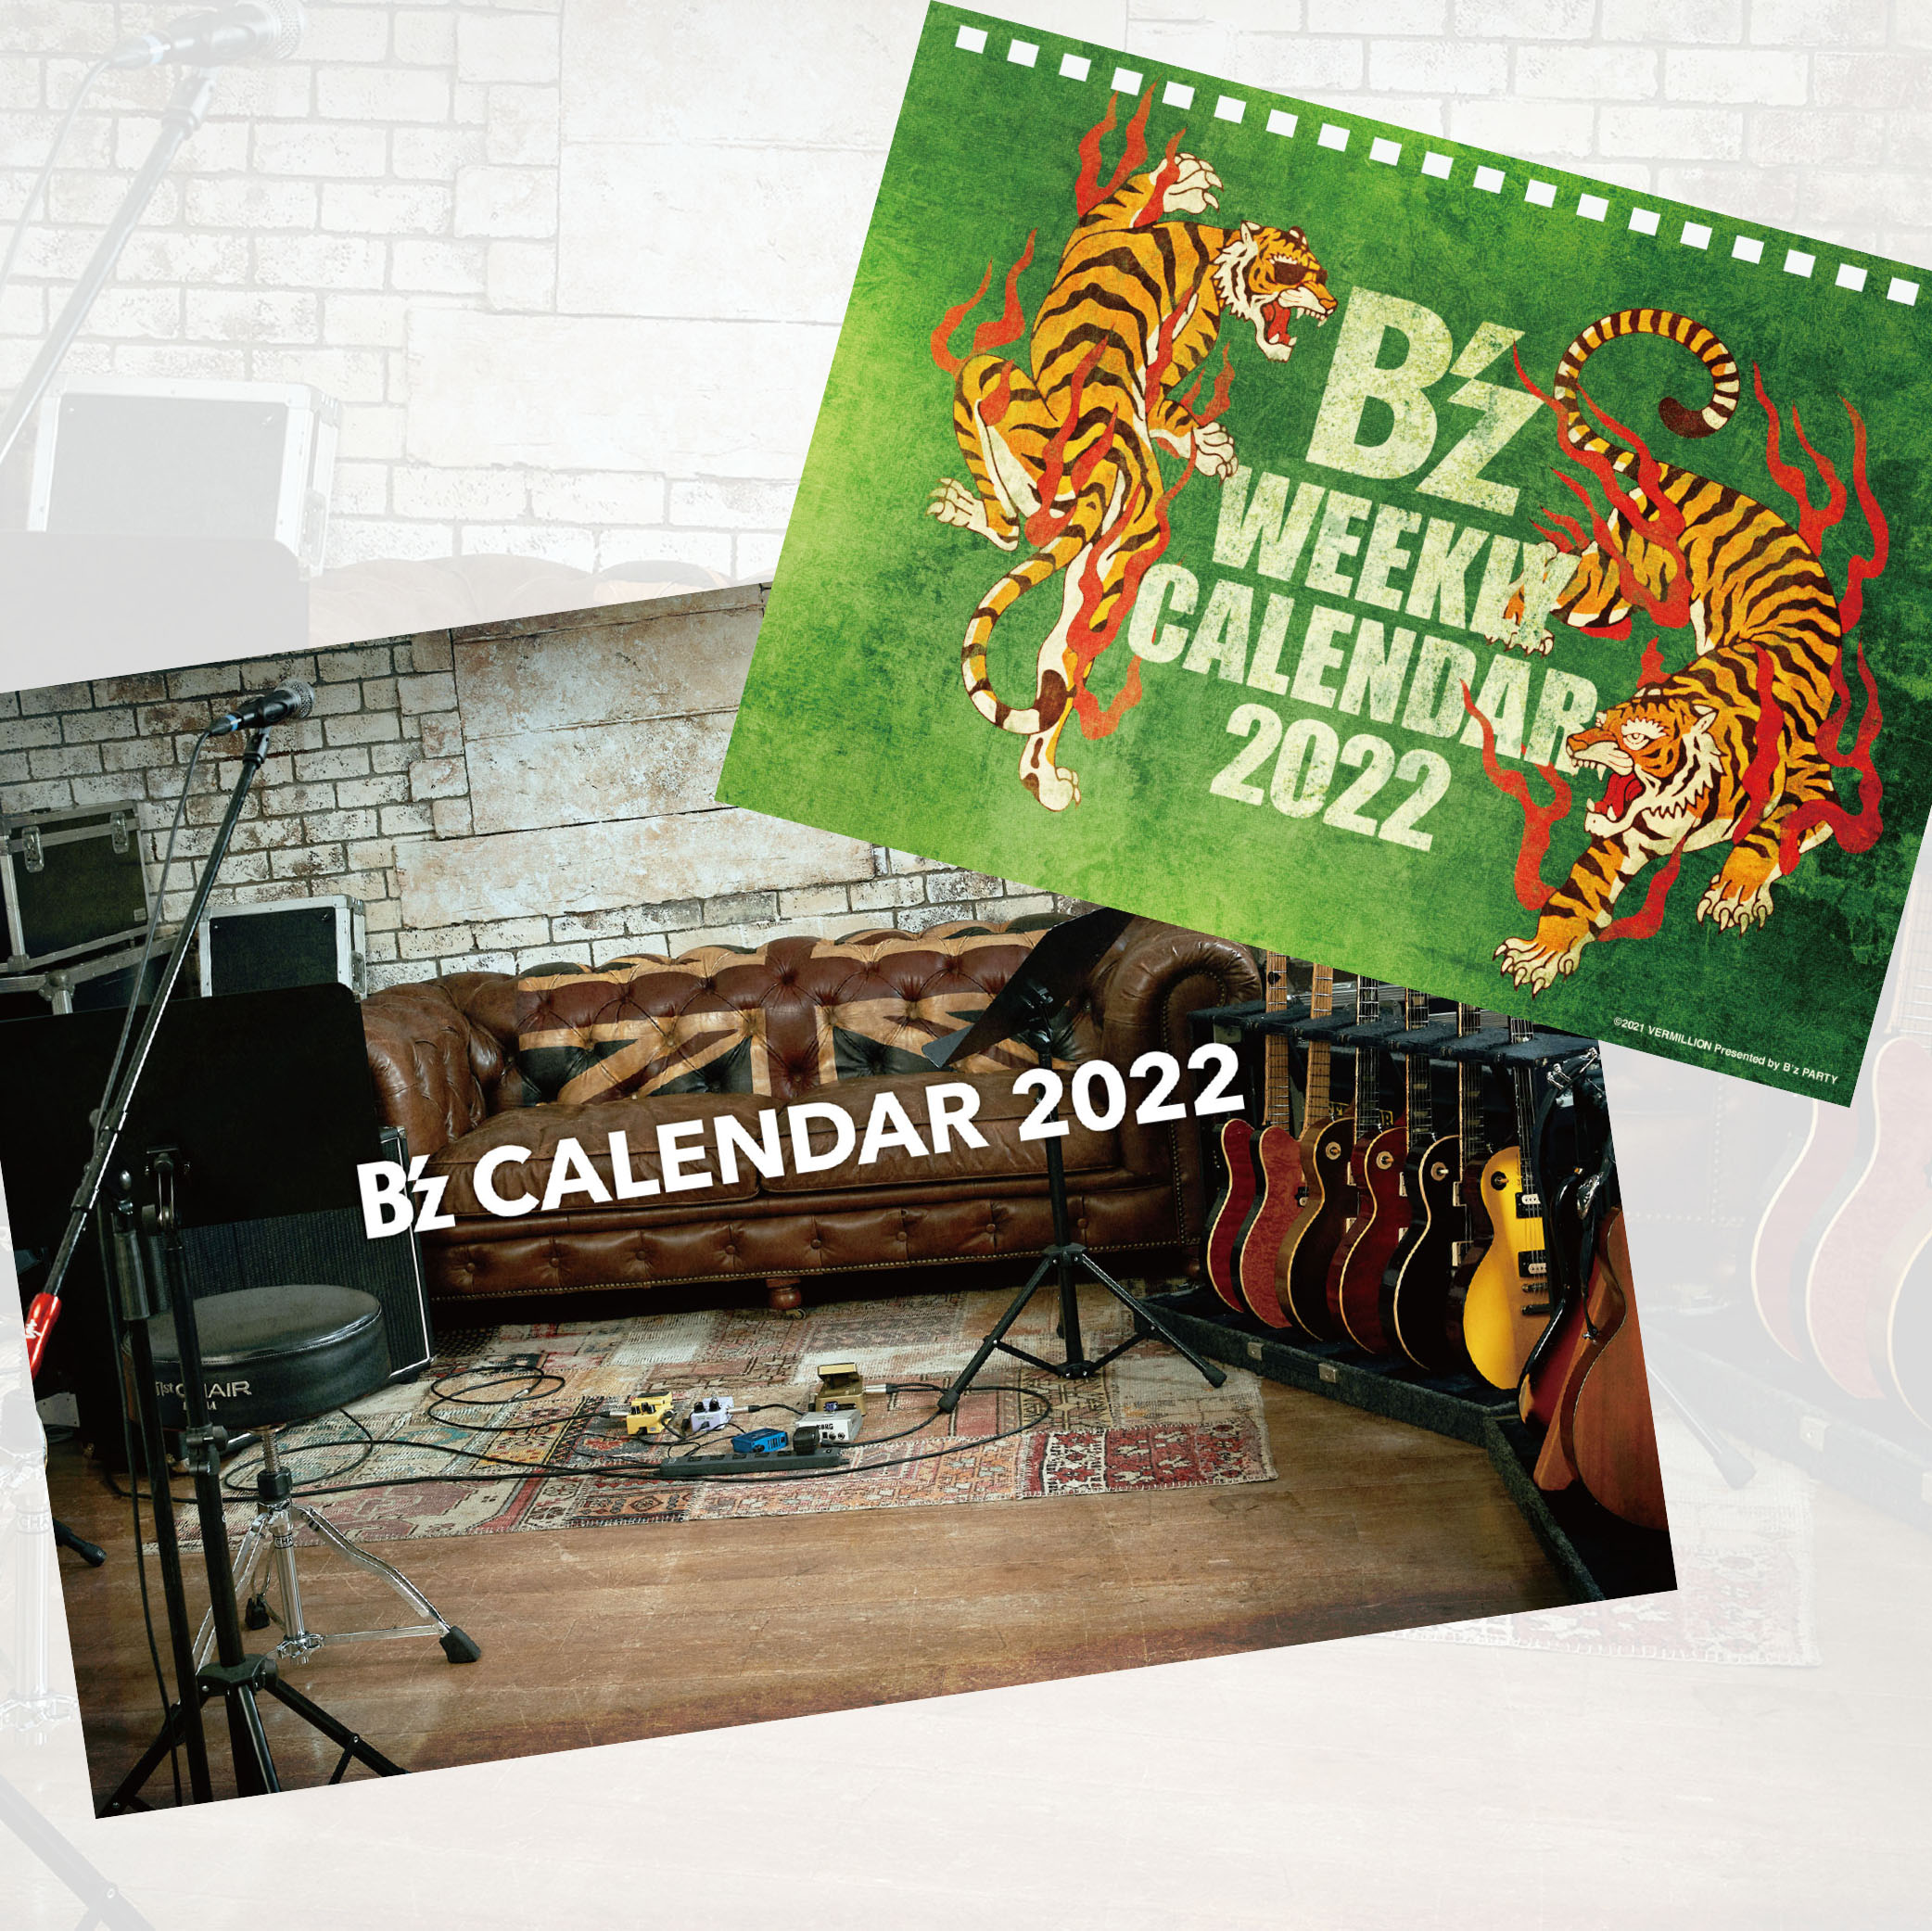 『B'zカレンダー2022』表示のイメージ画像